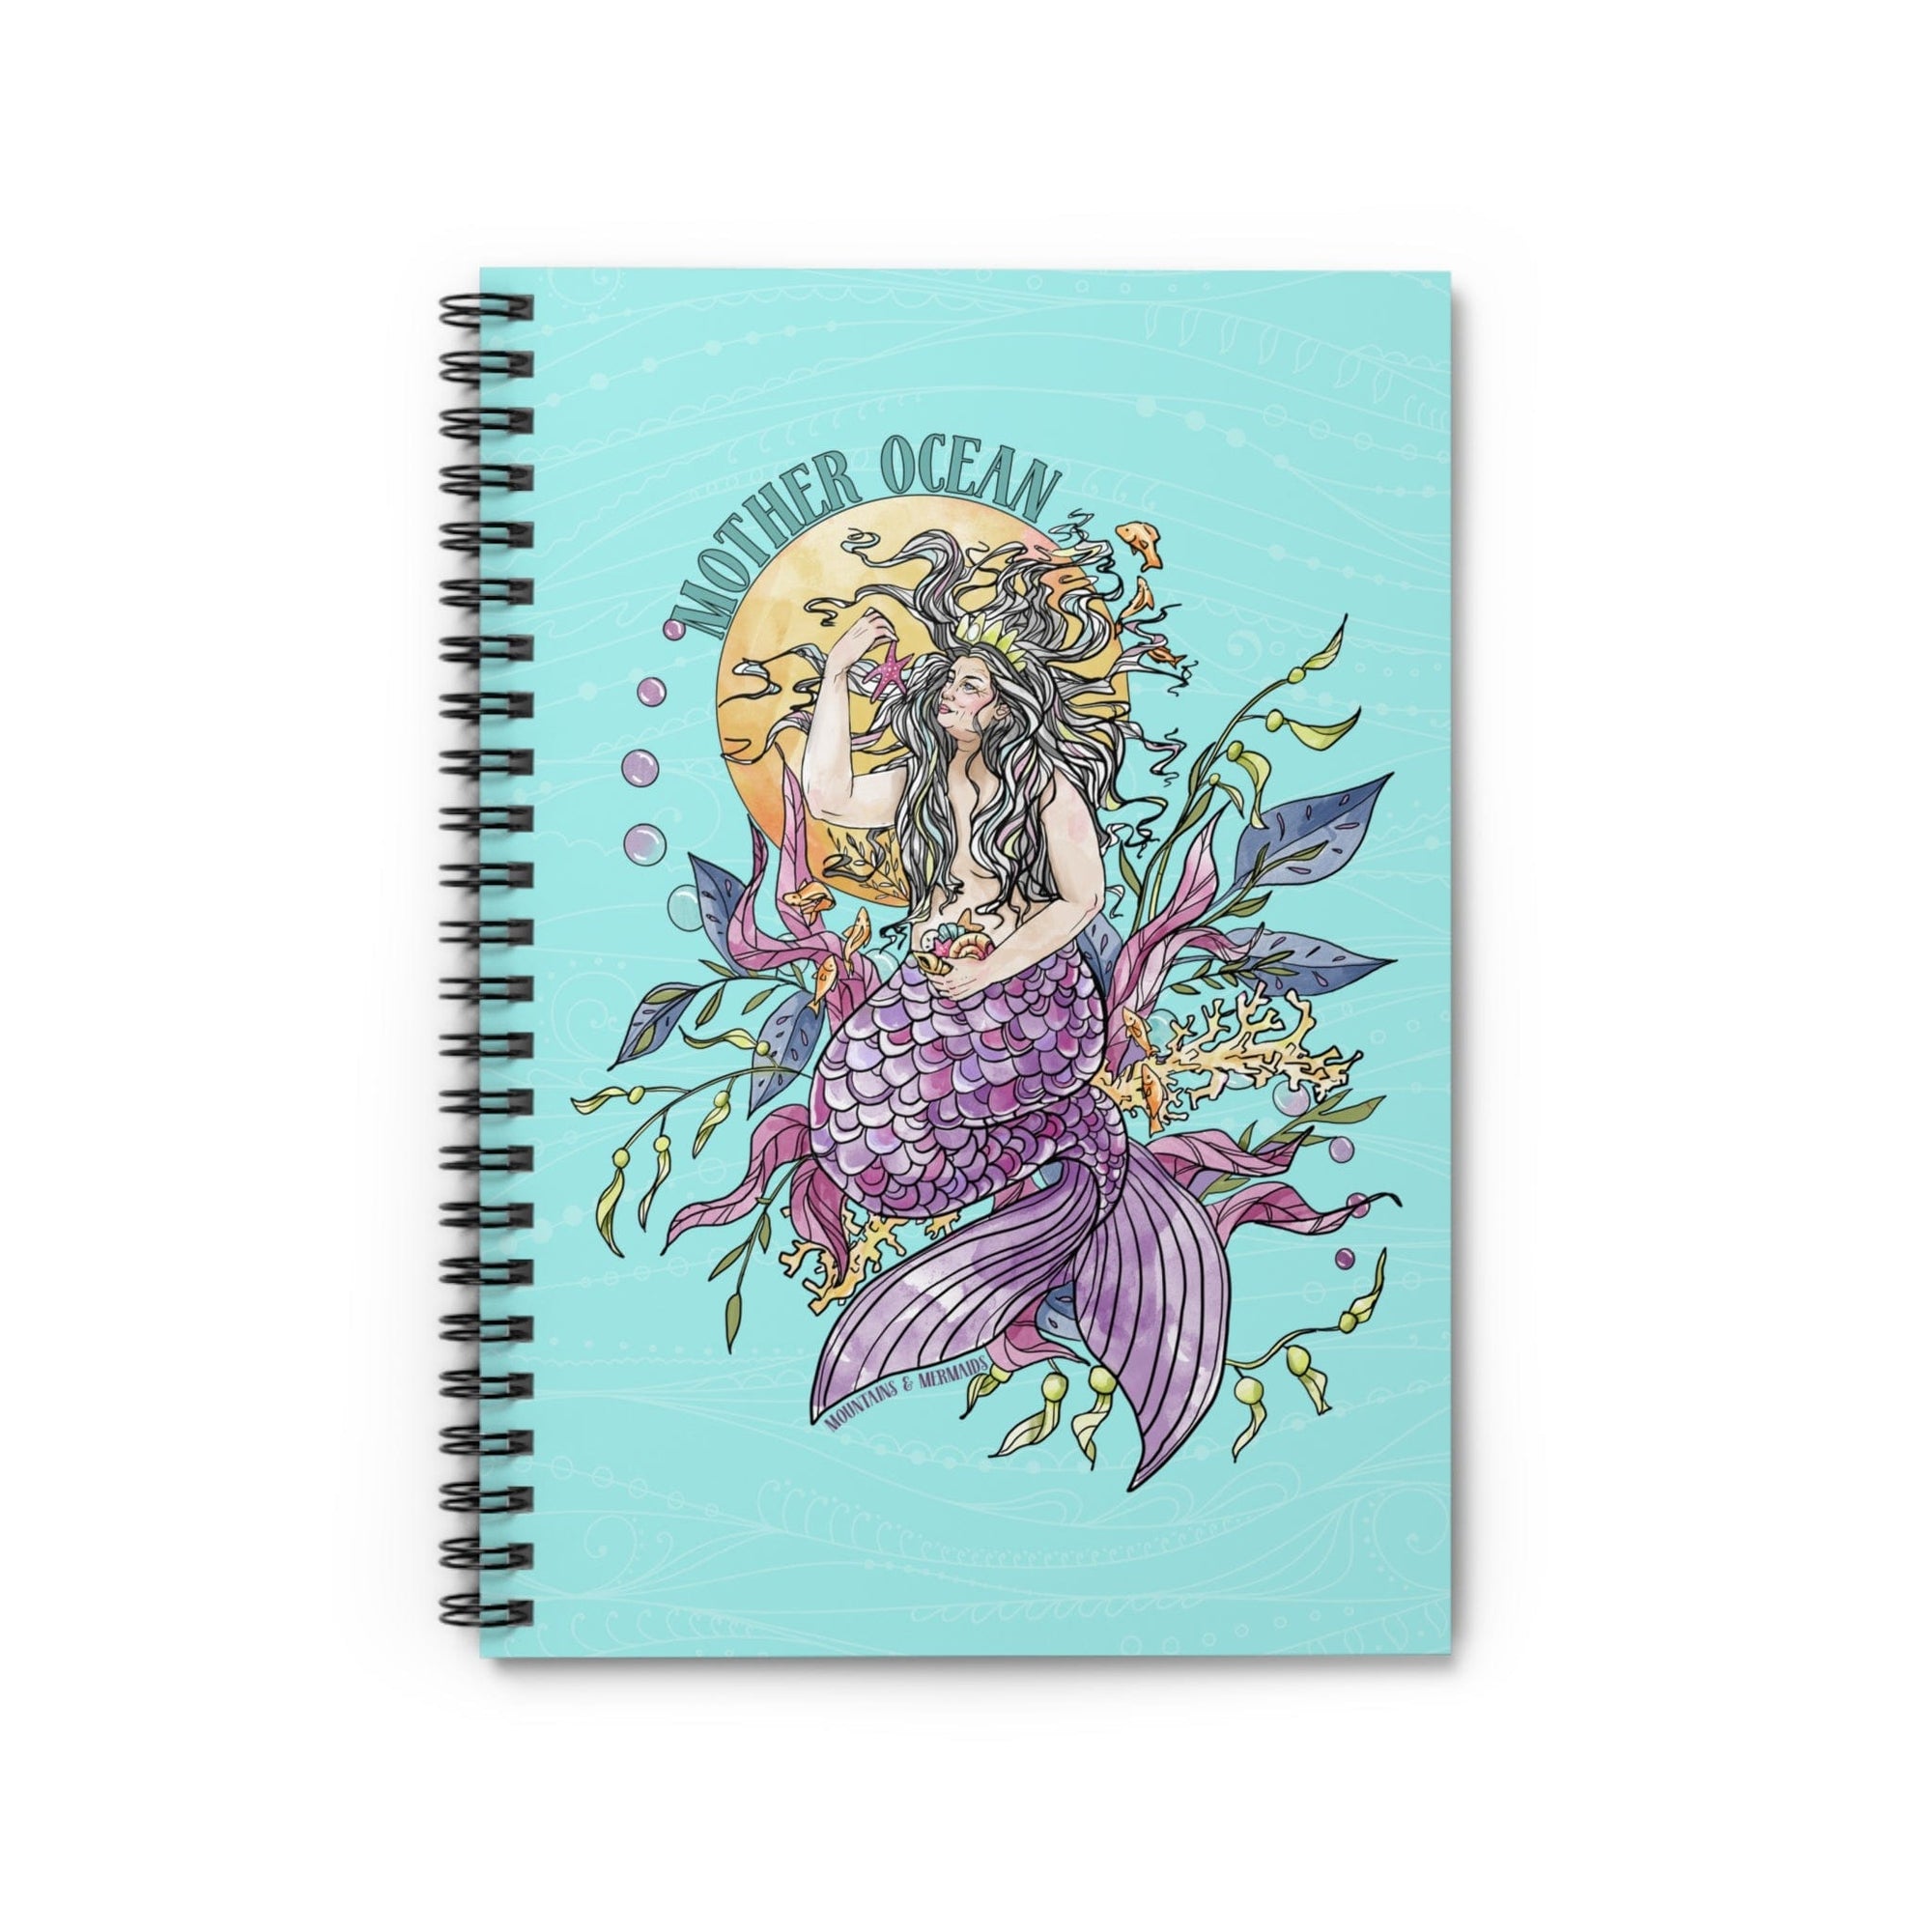 Mother Ocean Teal Spiral Notebook - Ruled Line - Mountains & Mermaids